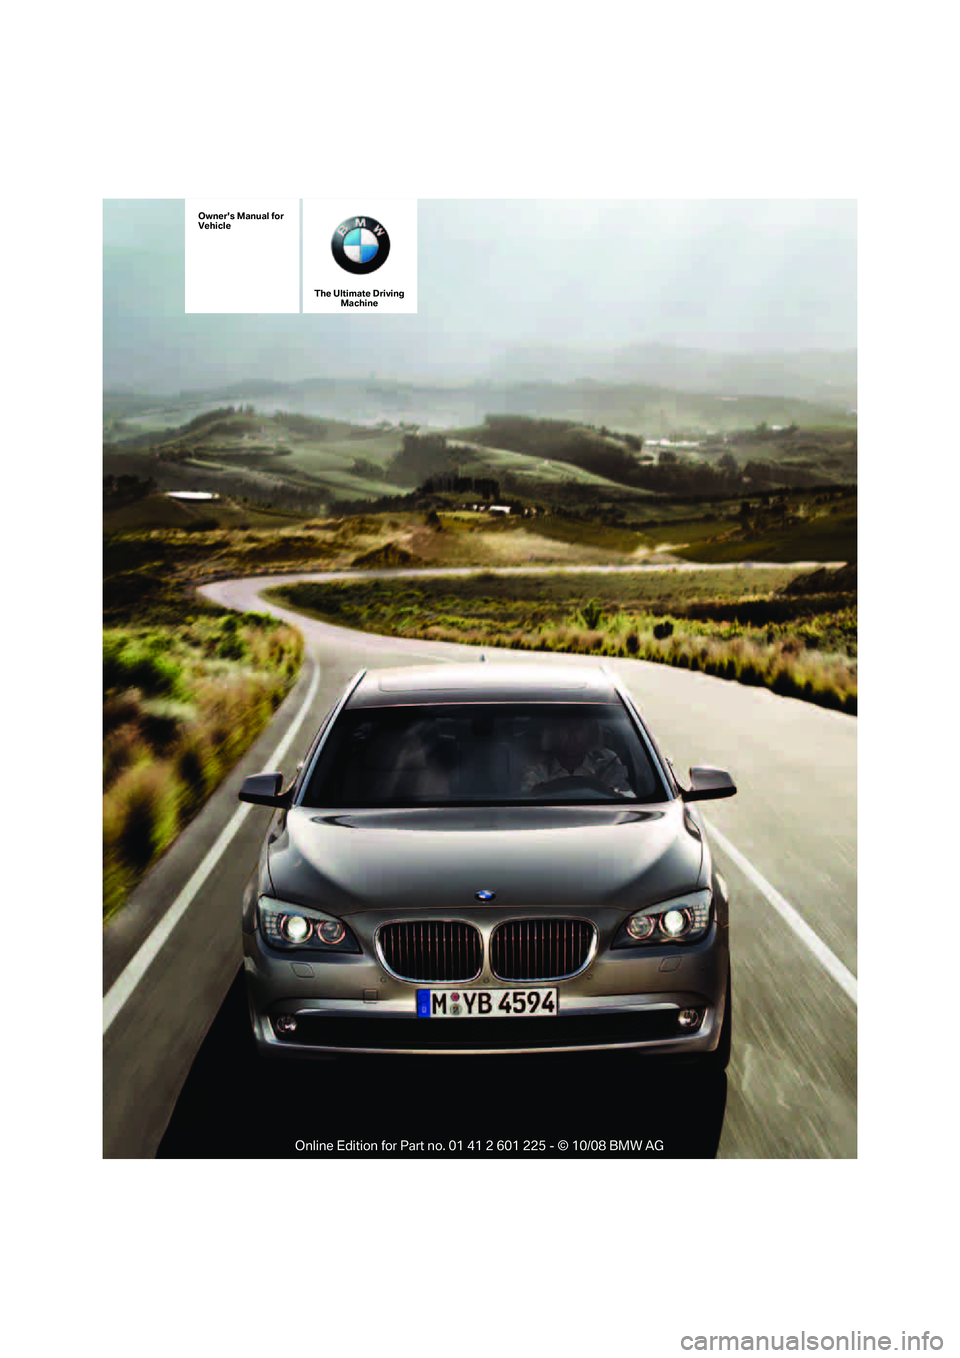 BMW 7 SERIES 2009  Owners Manual �5�I�F��6�M�U�J�N�B�U�F��%�S�J�W�J�O�H�.�B�D�I�J�O�F
�0�X�O�F�S��T��.�B�O�V�B�M��G�P�S
�7�F�I�J�D�M�F
Online Edition for Part no. 01 41 2 601 225 - © 10/08 BMW AG 